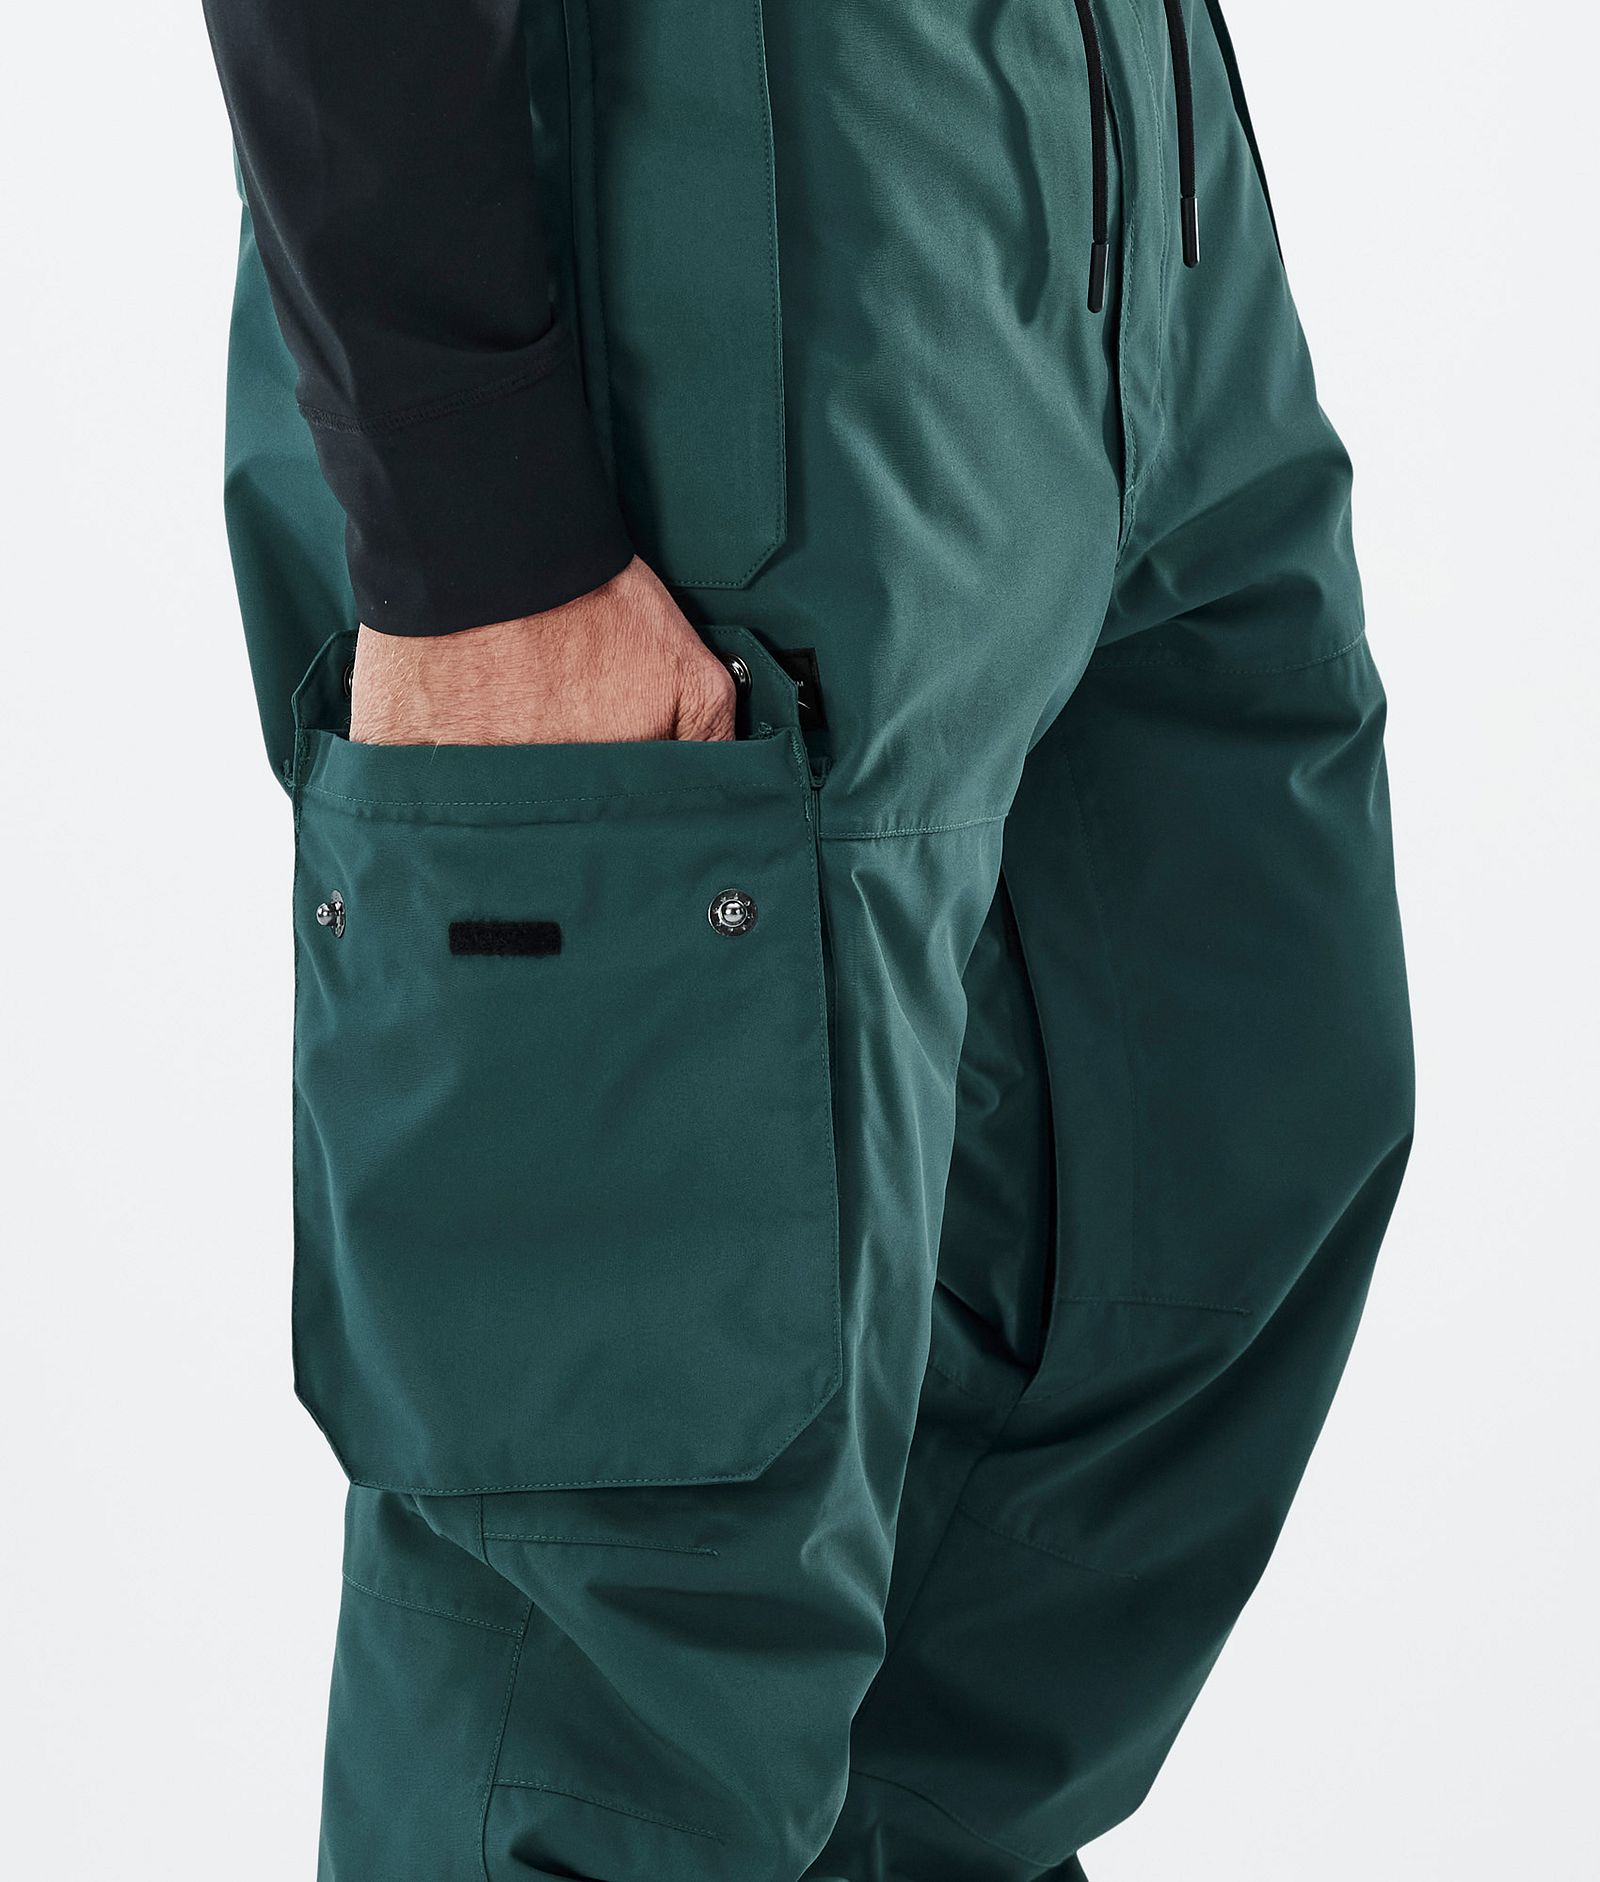 Dope Iconic Pantalon de Snowboard Homme Bottle Green